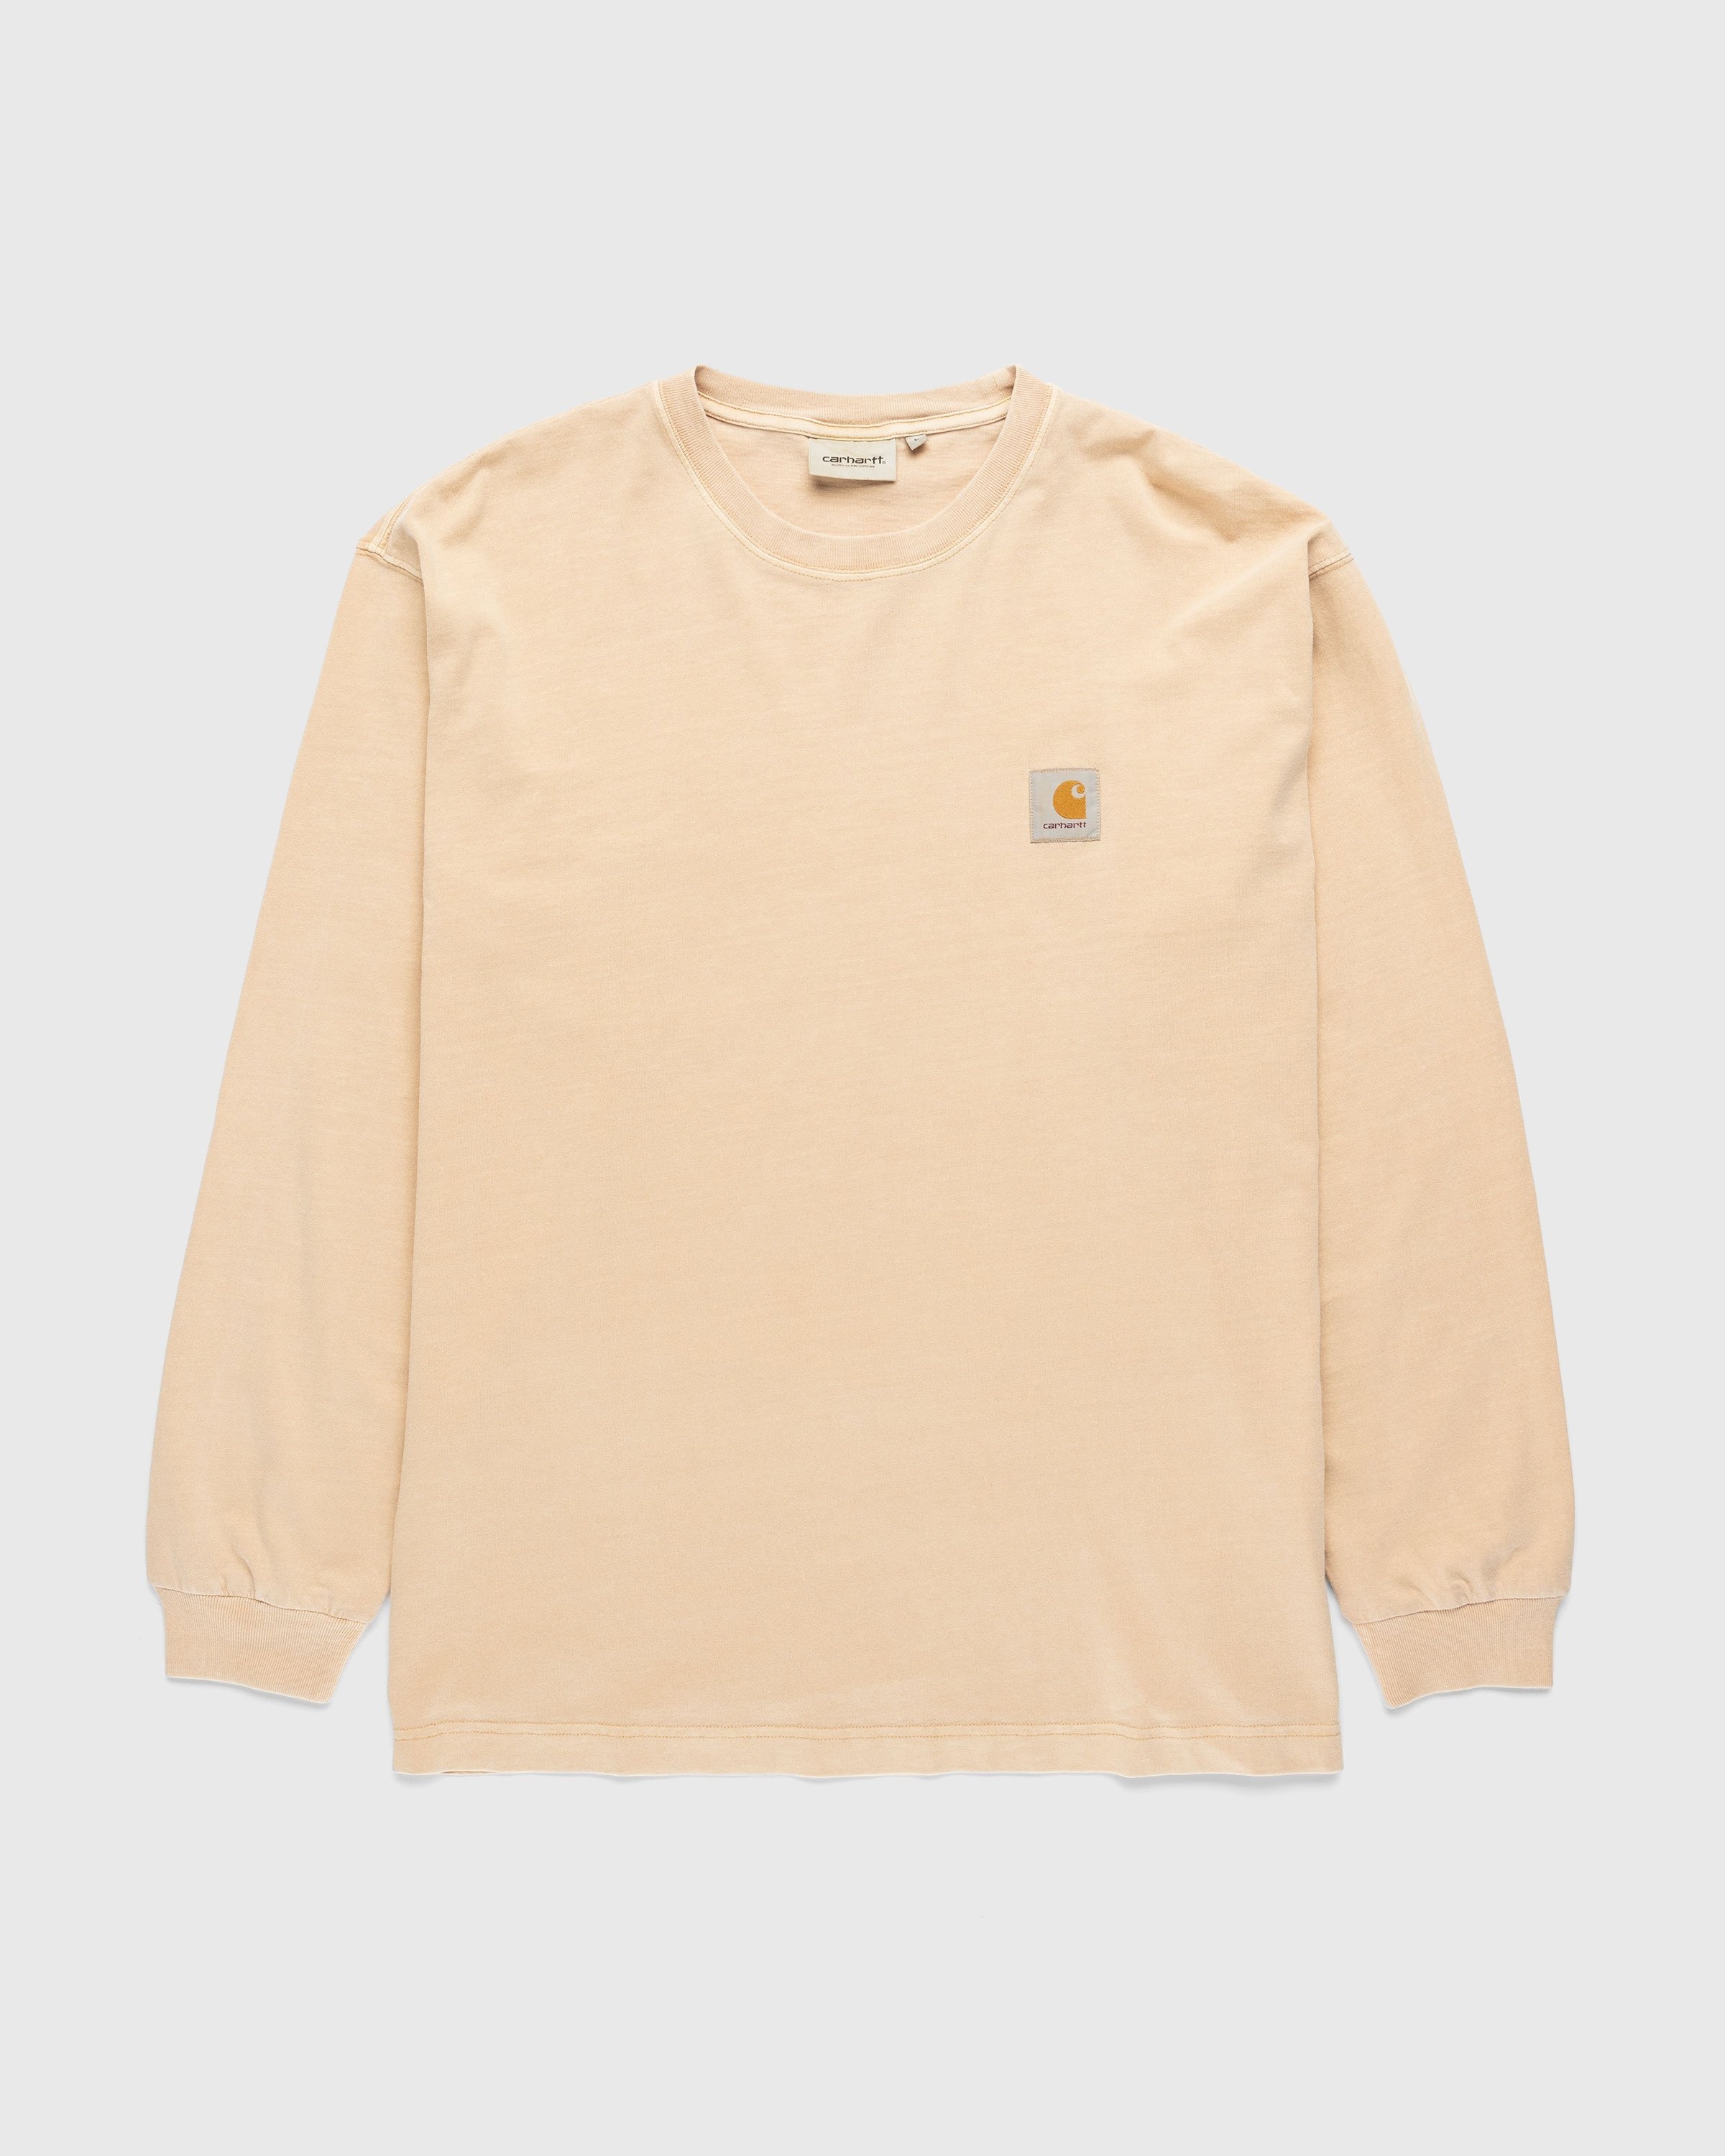 Carhartt WIP – Nelson Longsleeve T-Shirt Garment-Dyed Dusty Hamilton Brown - Tops - Brown - Image 1